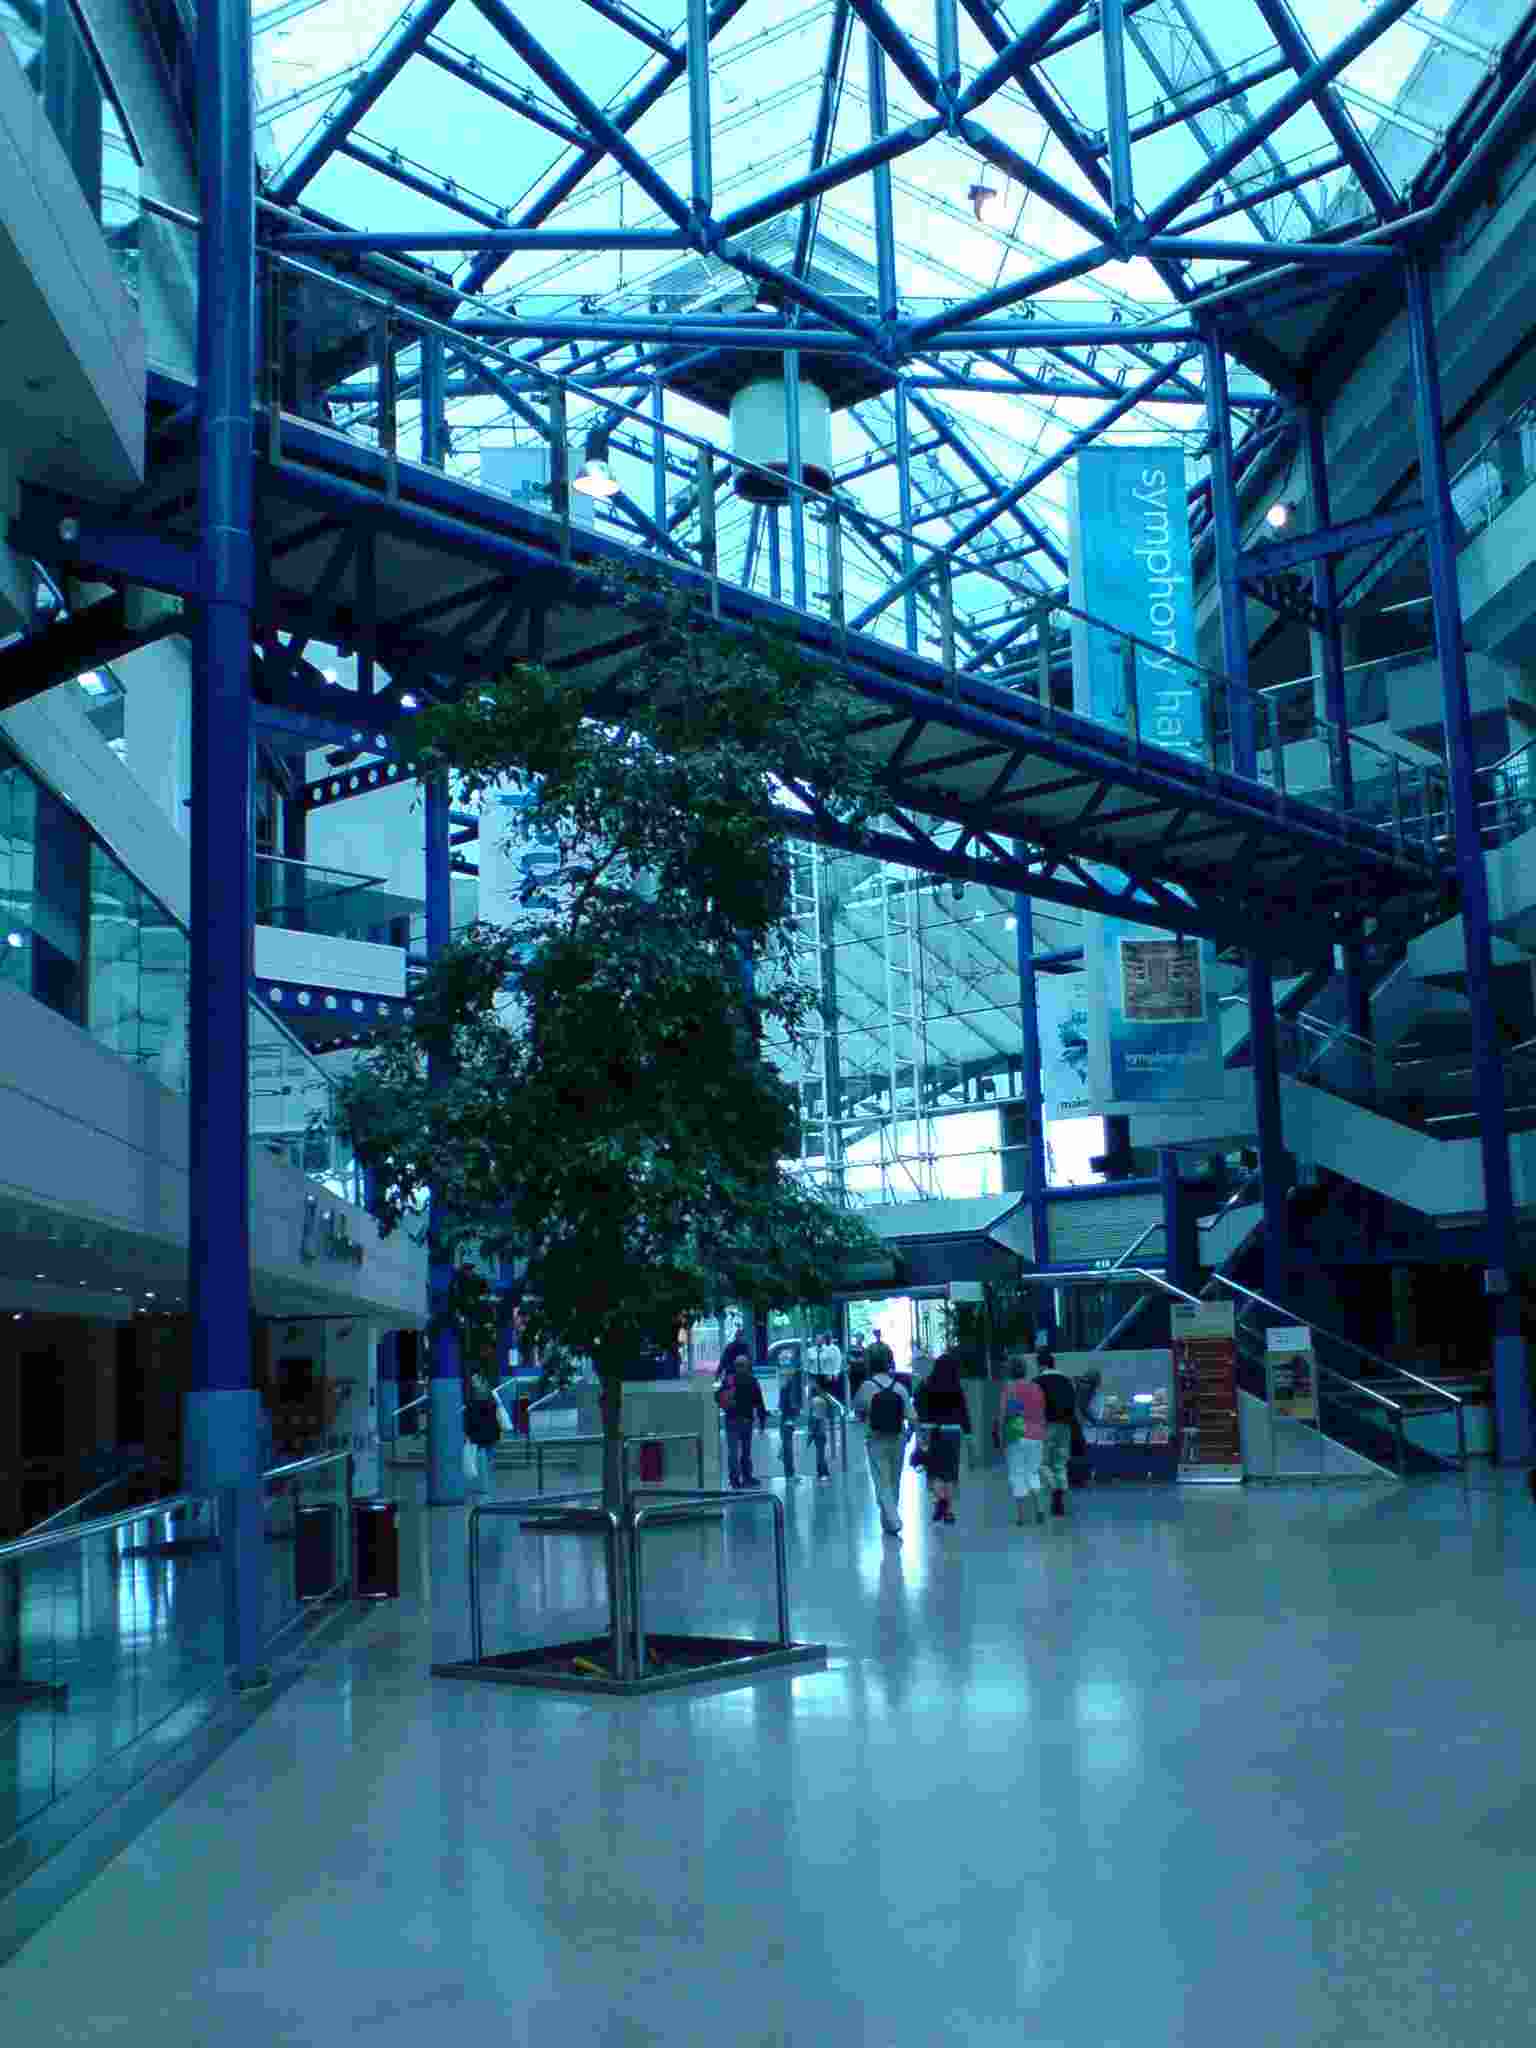 ImagesBirmingham/Birmingham Centre Broad Street ICC Symphony Hall Atrium.jpg